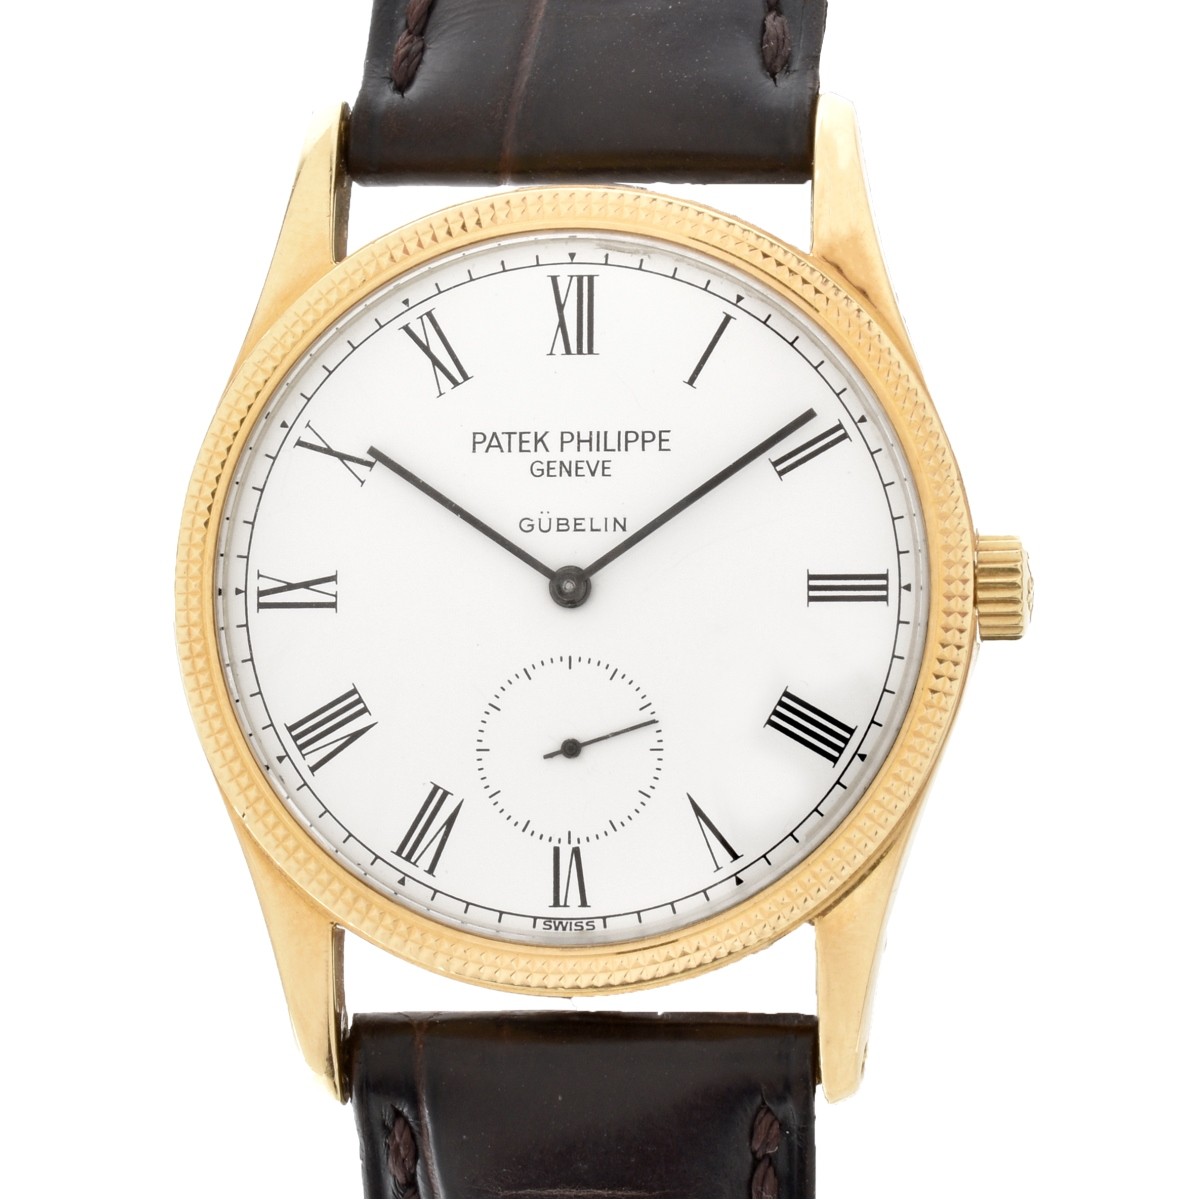 Patek Philippe Gubelin 18K Watch